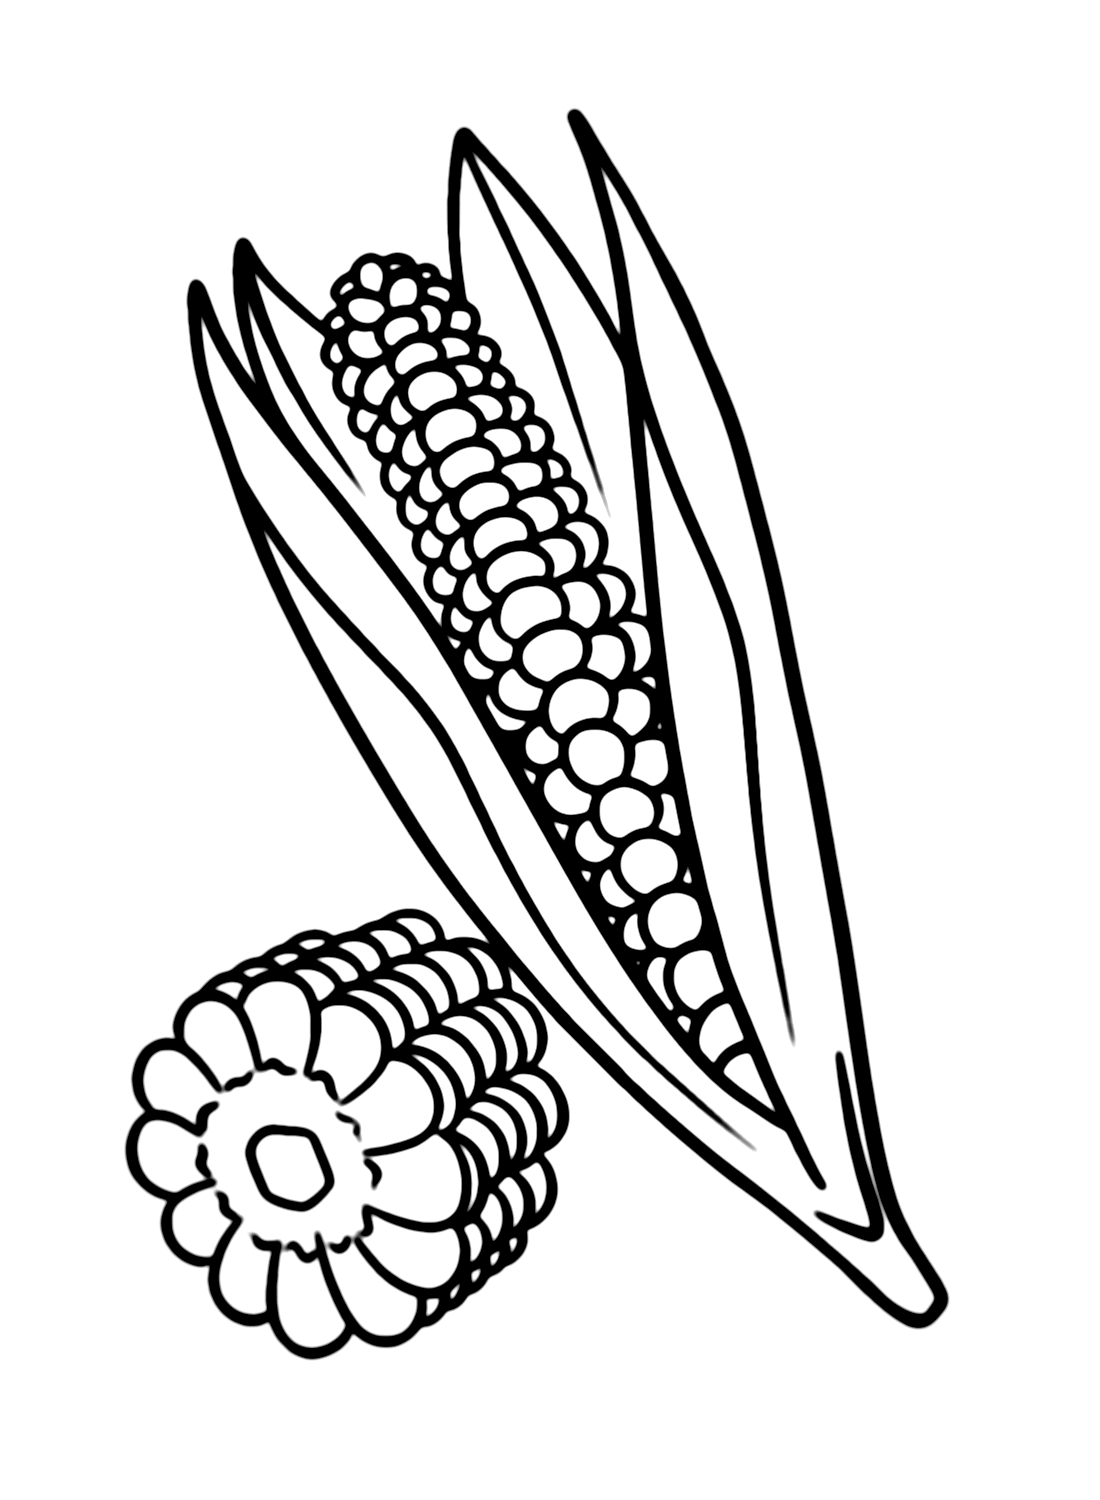 Corn Printable from Corn